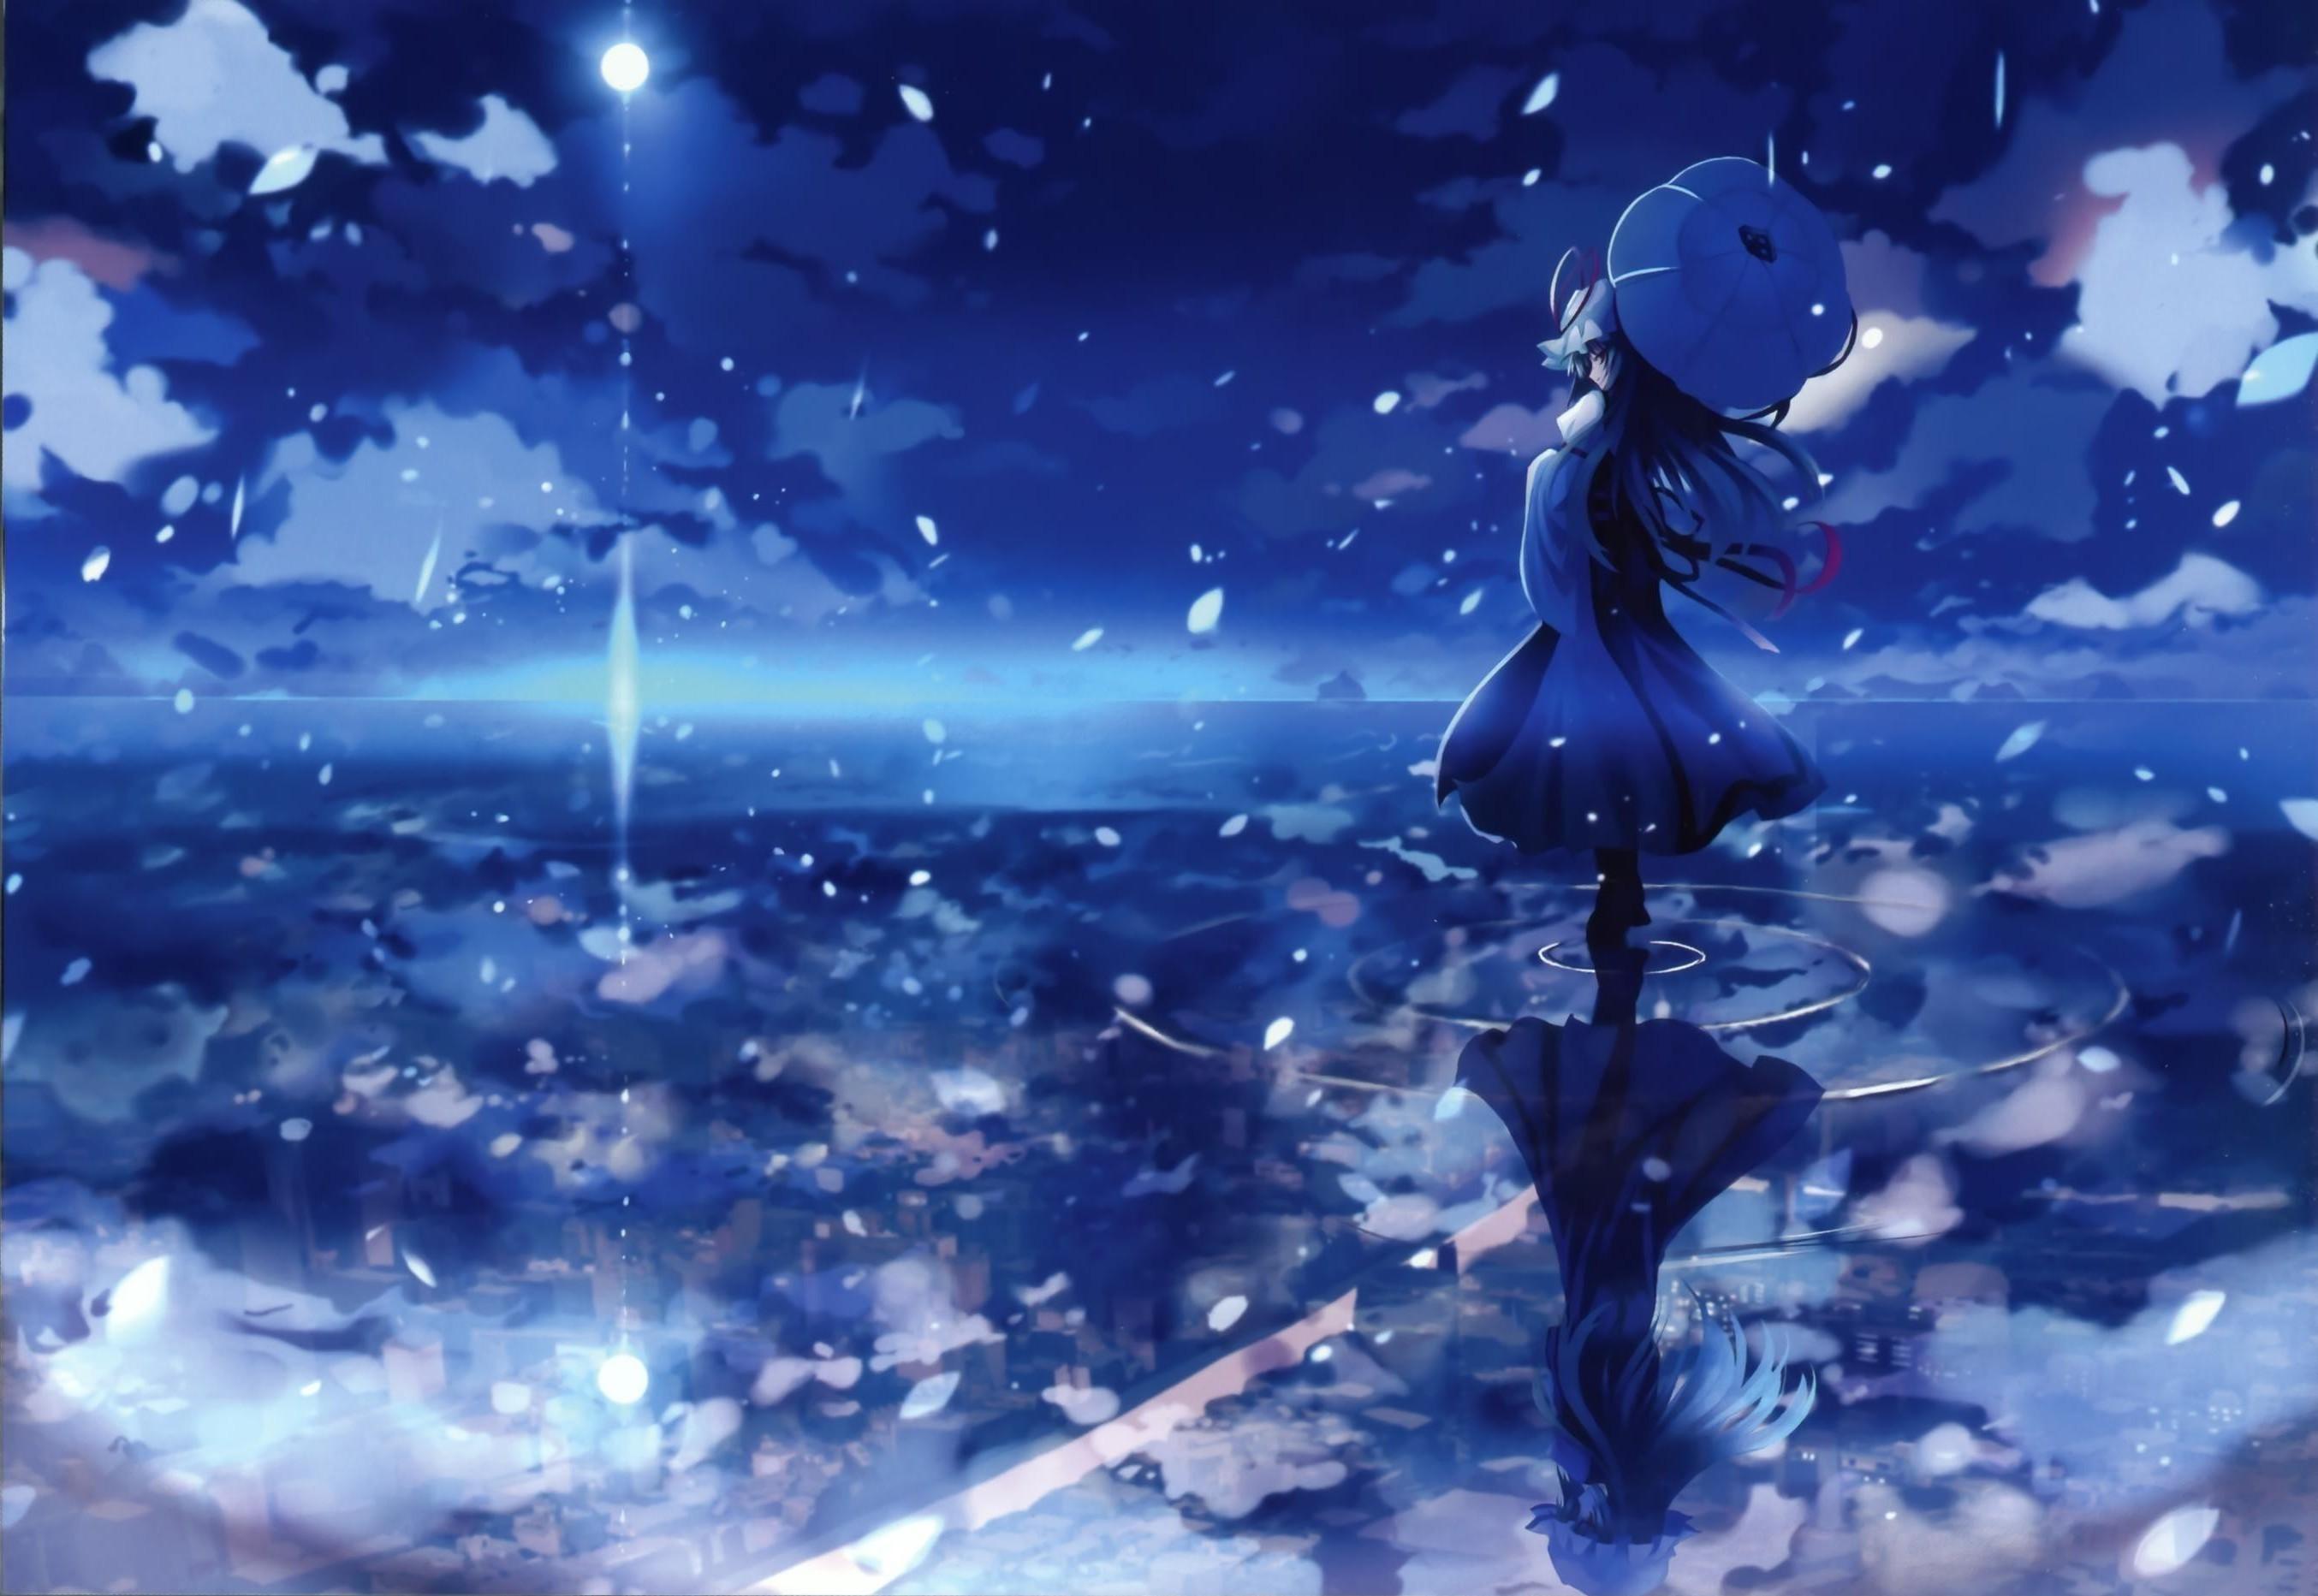 Dark Blue Sky Anime Scenery Wallpapers - Wallpaper Cave